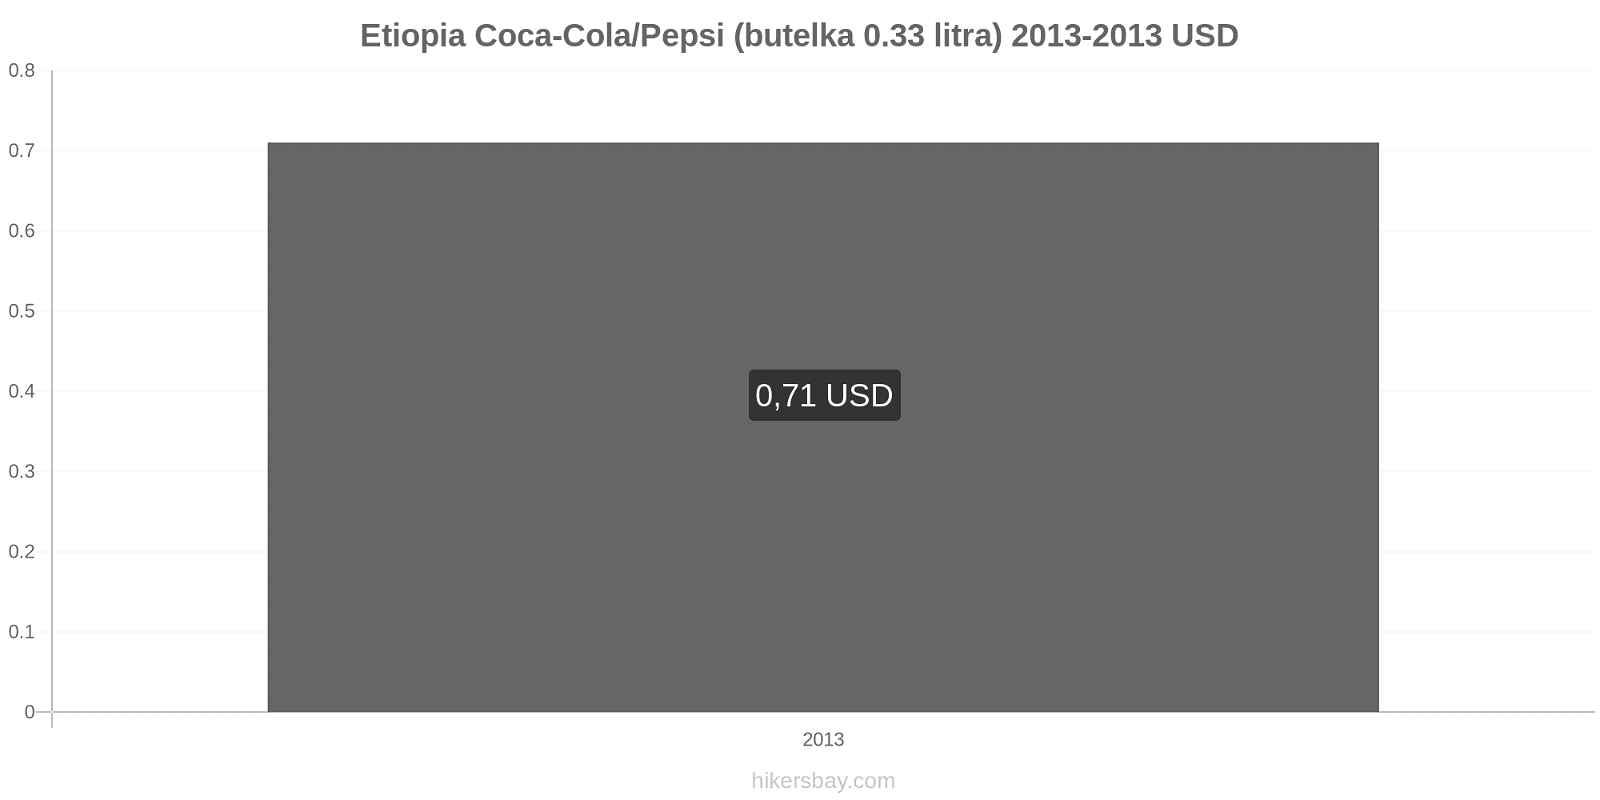 Etiopia zmiany cen Coca-Cola/Pepsi (butelka 0.33 litra) hikersbay.com